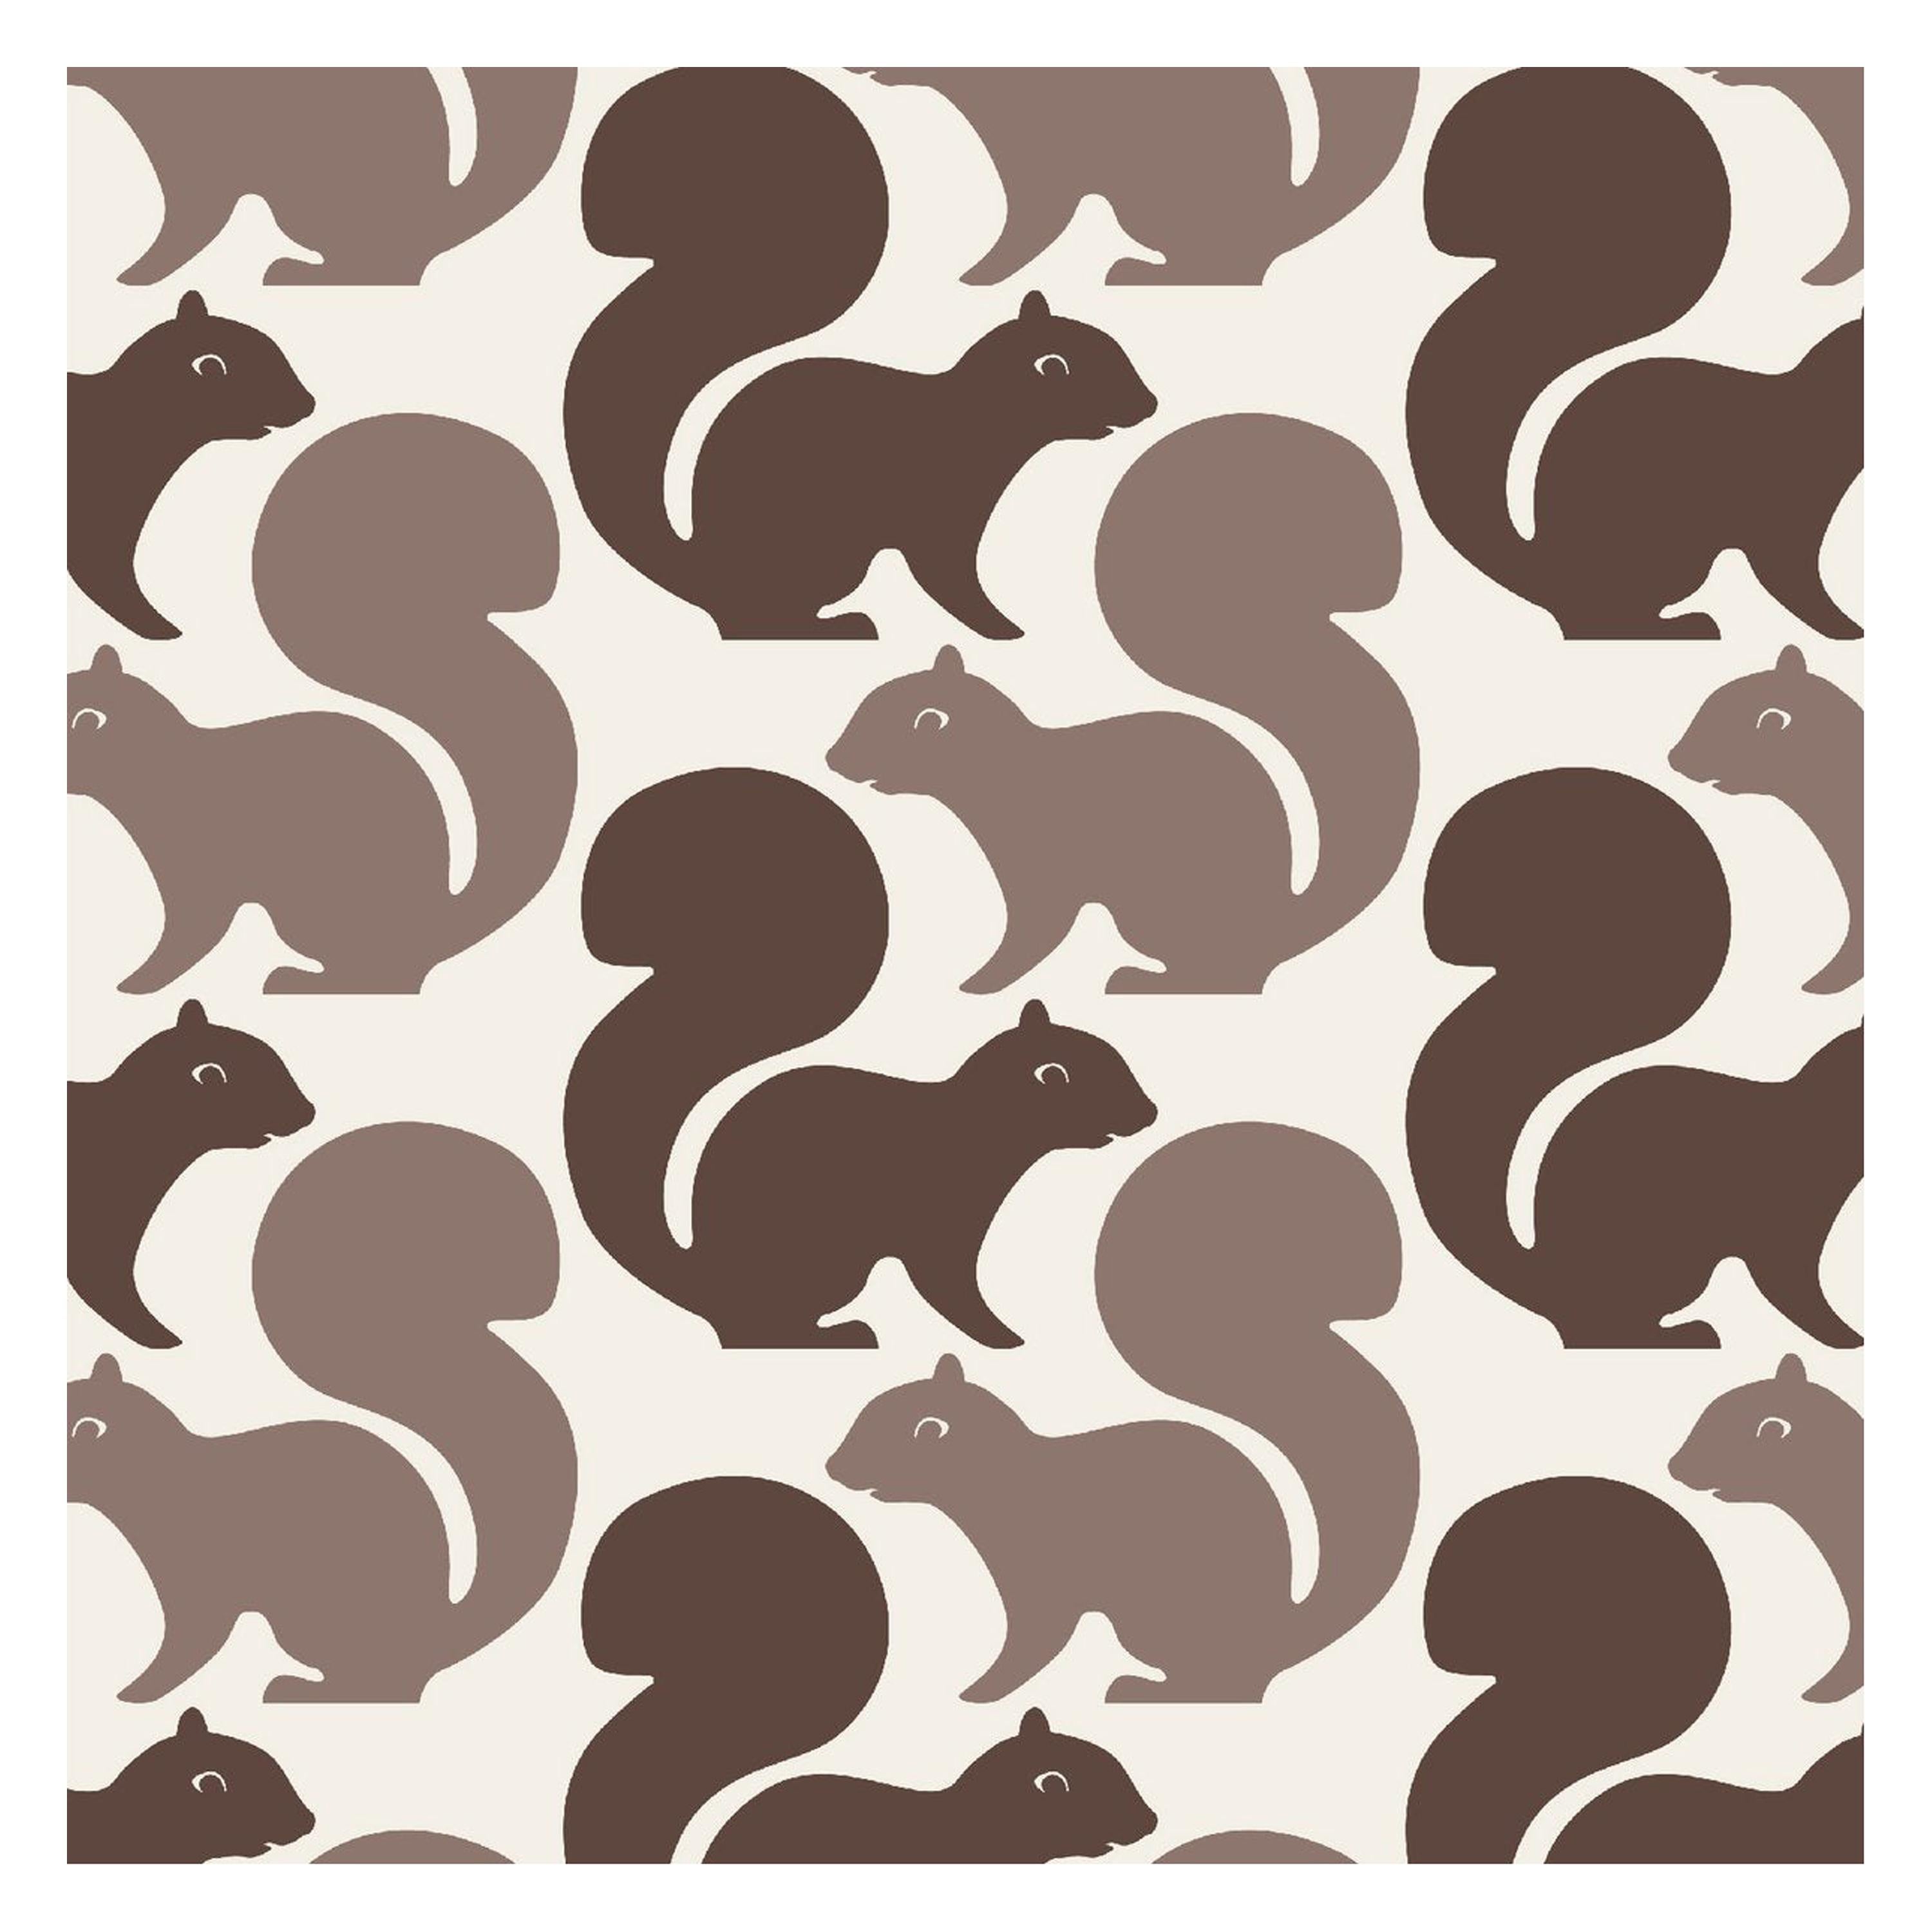 Squirrels Designer Wallpaper in Latte 'Chocolate Brown and Khaki on Cream'